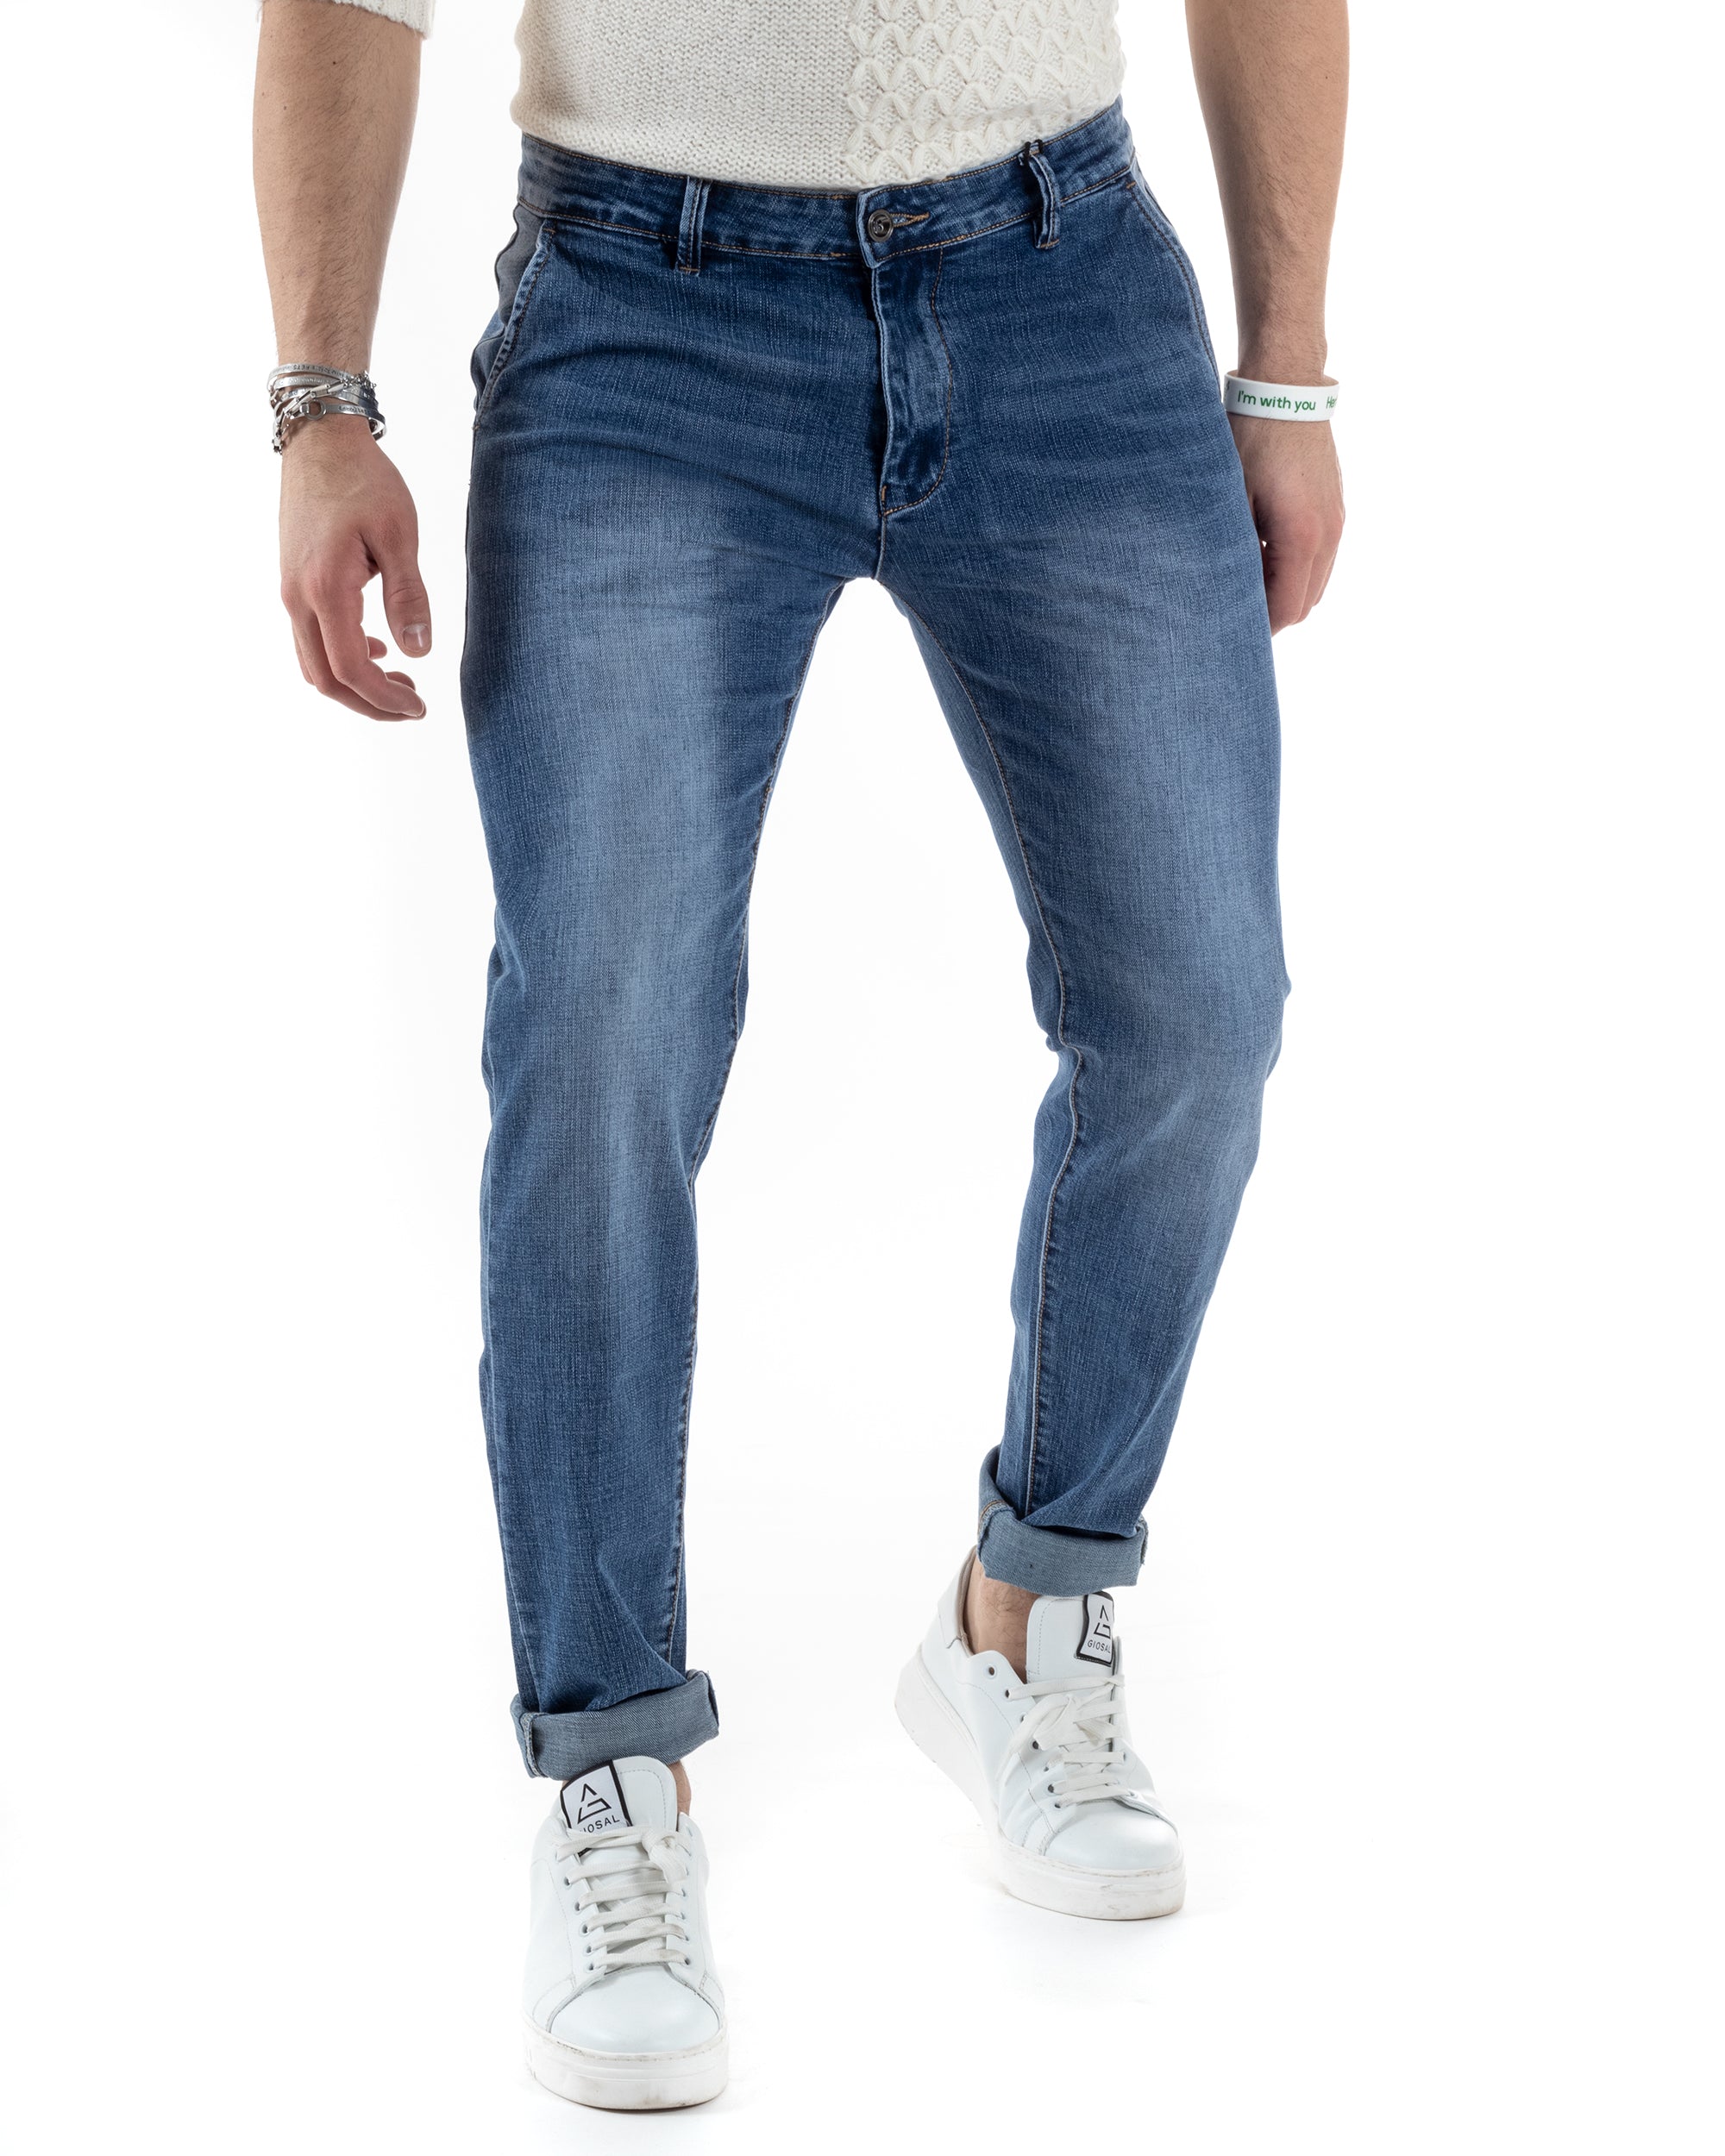 Pantaloni Uomo Jeans Tasca America Slim Fit Blu Denim Stone Washed GIOSAL-JS1009A